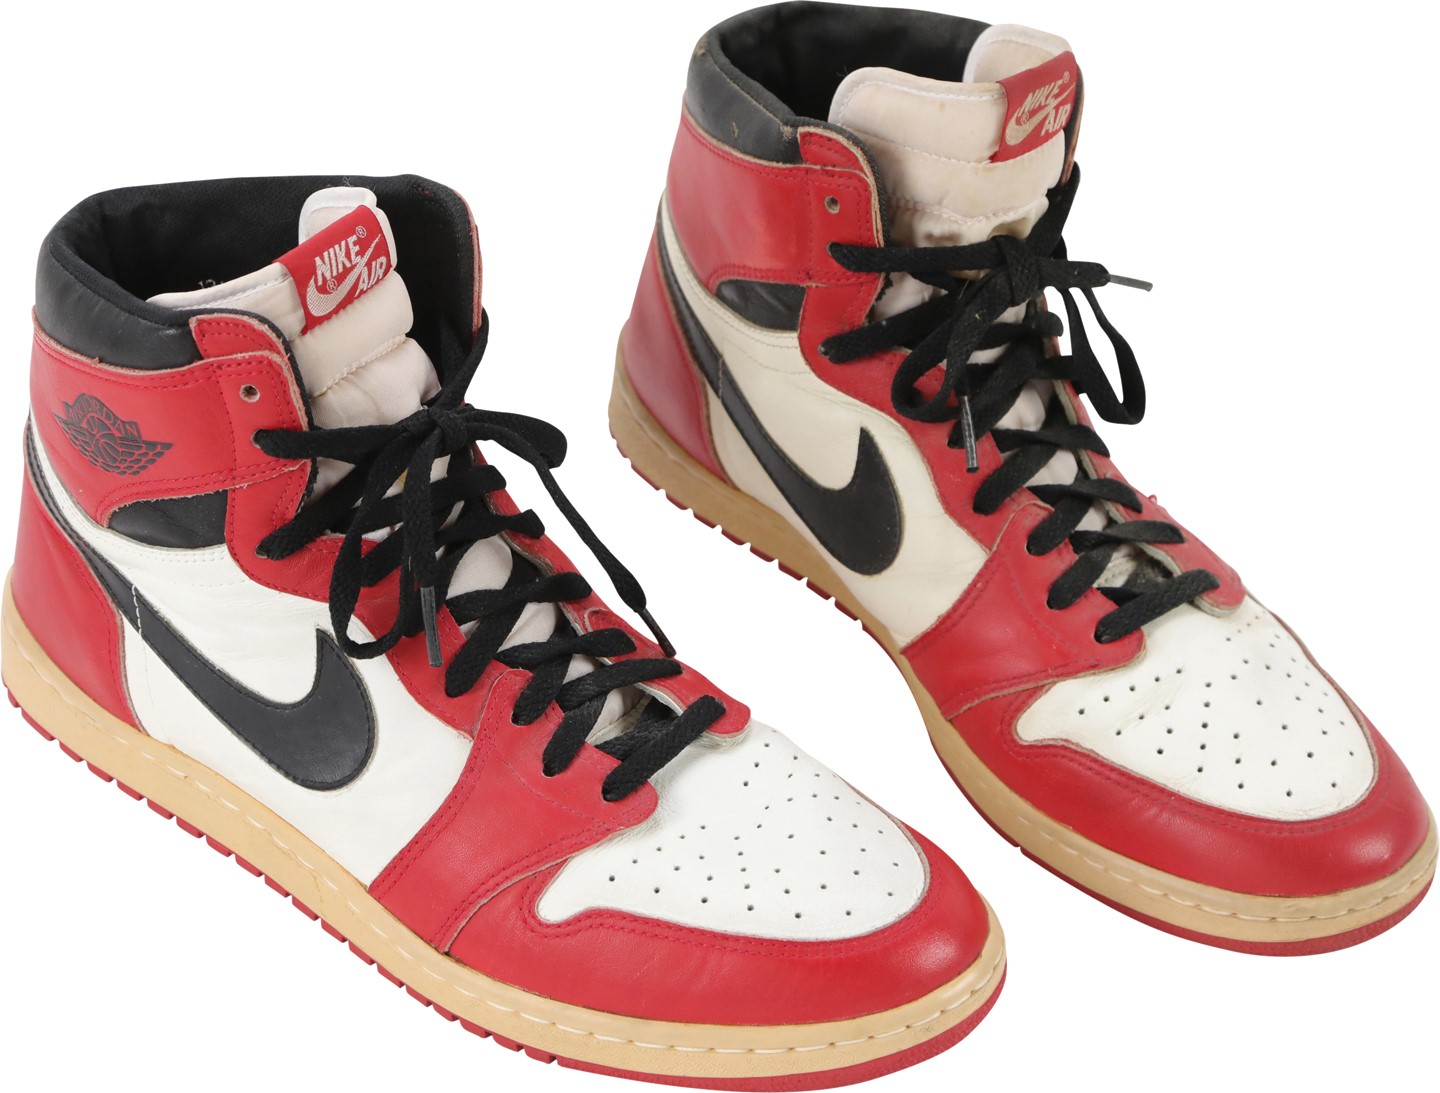 85 Michael Jordan Chicago Bulls Game Worn Air Jordan I Rookie Era Sneakers from Judge Cafe Collection (MEARS)